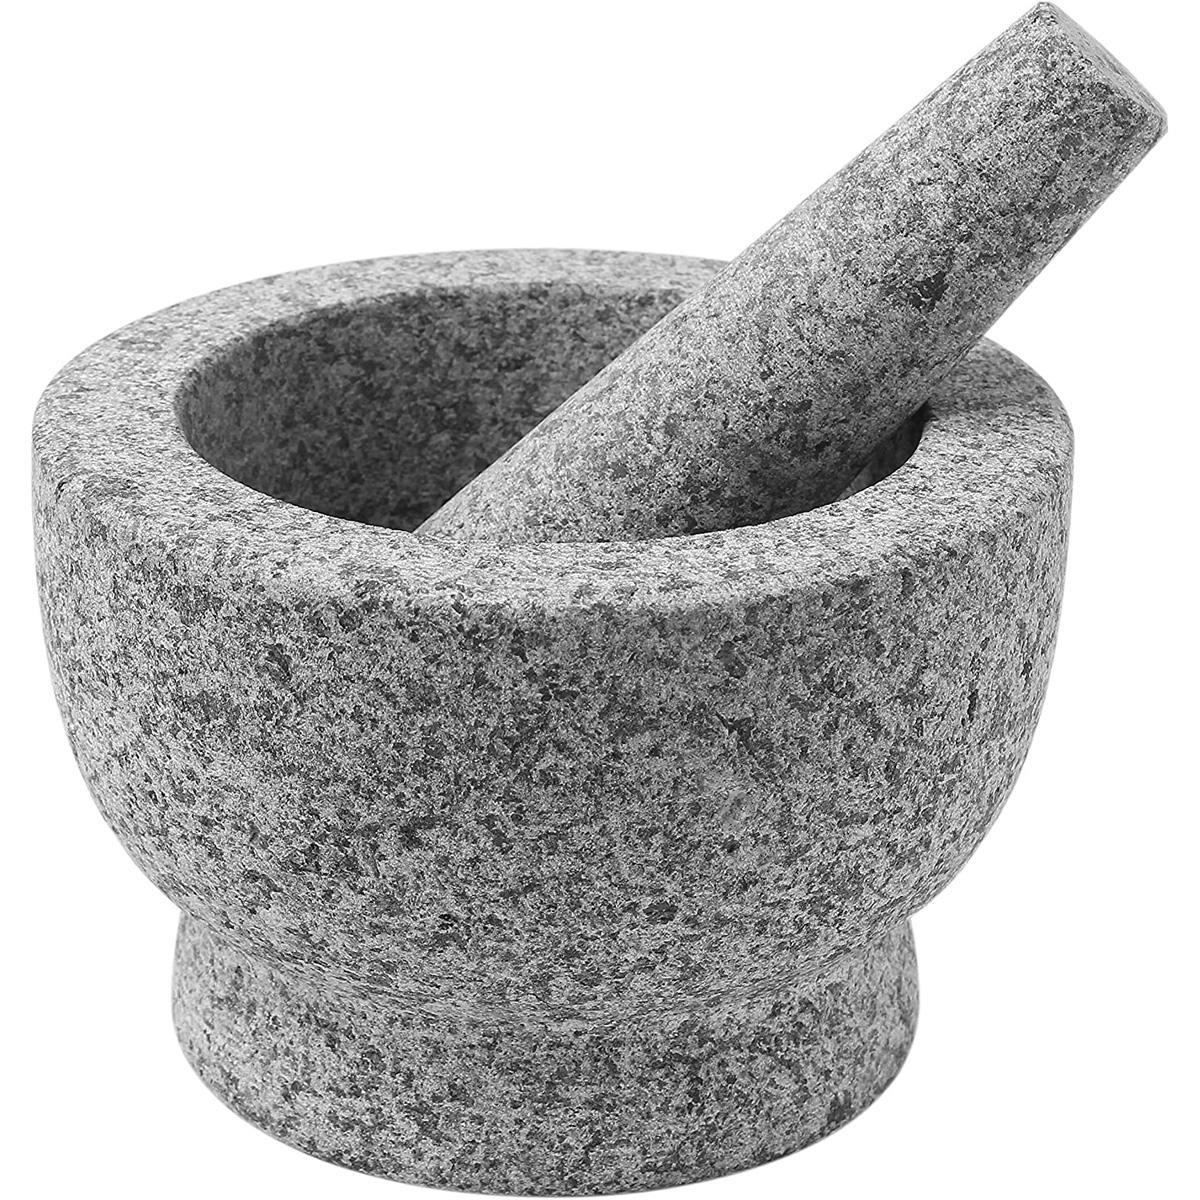 ChefSofi Granite Mortar and Pestle Set for $20.99 Shipped